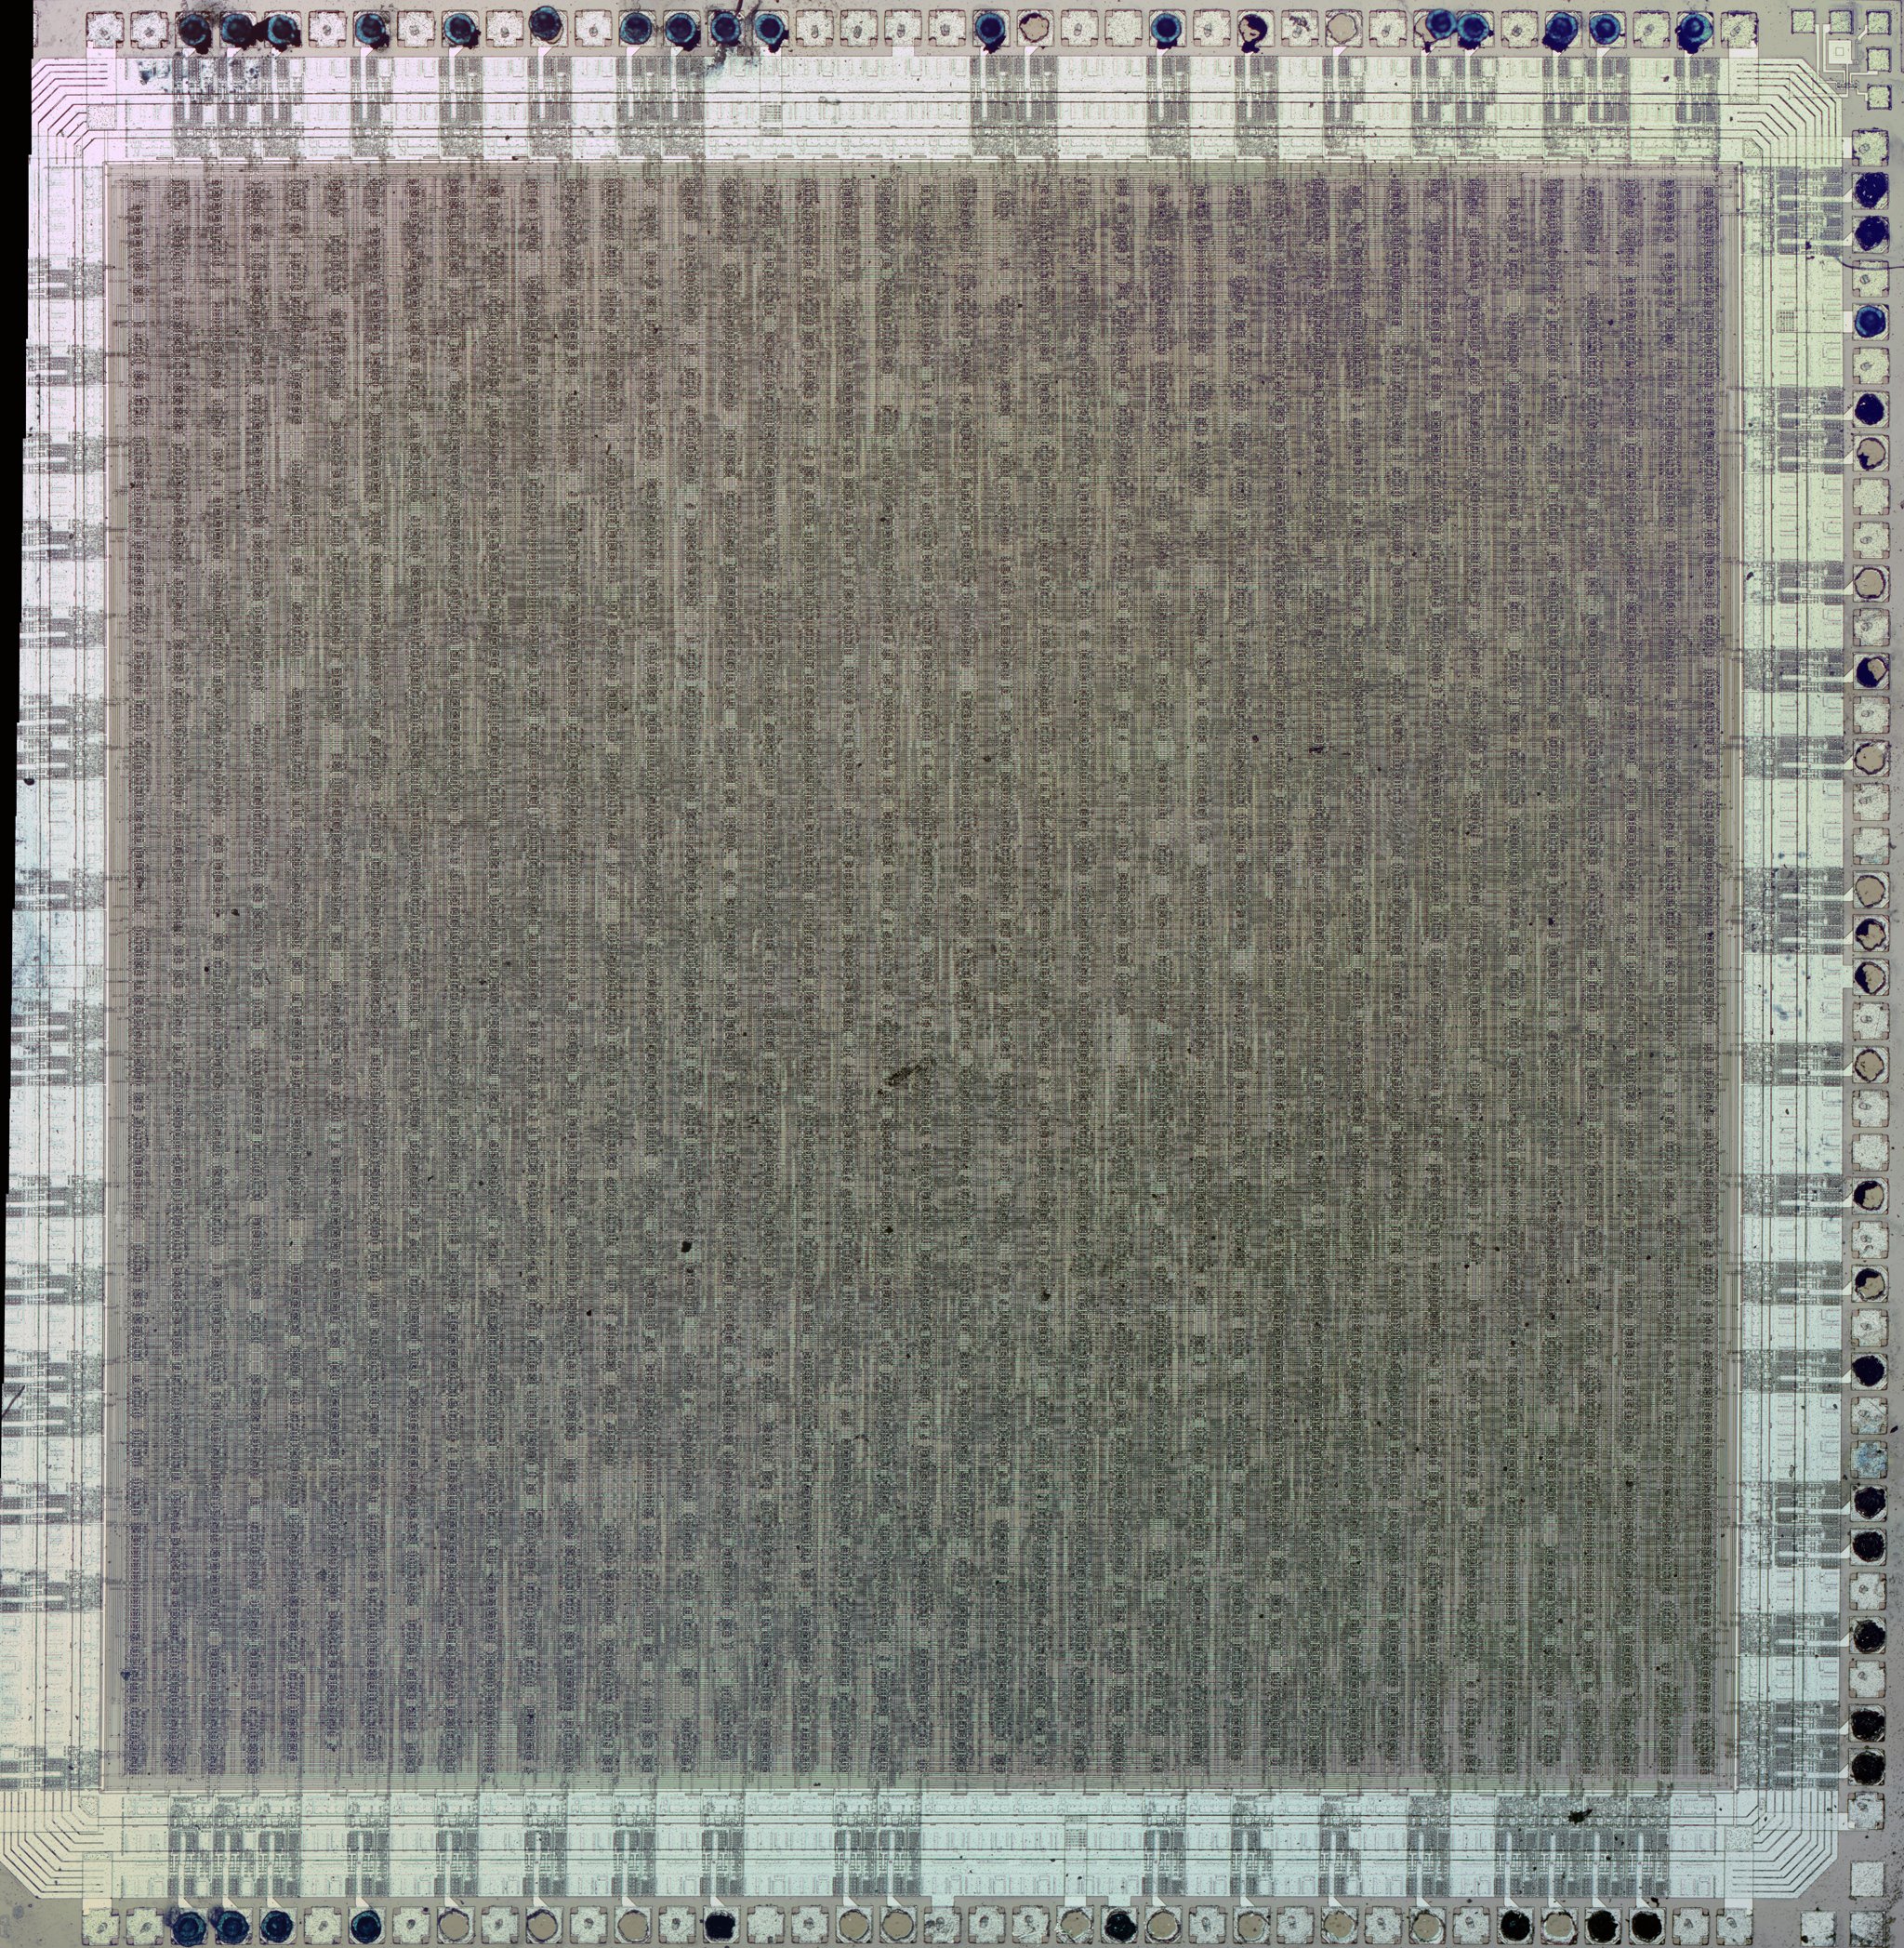 reverse engineering chips Konami 053260